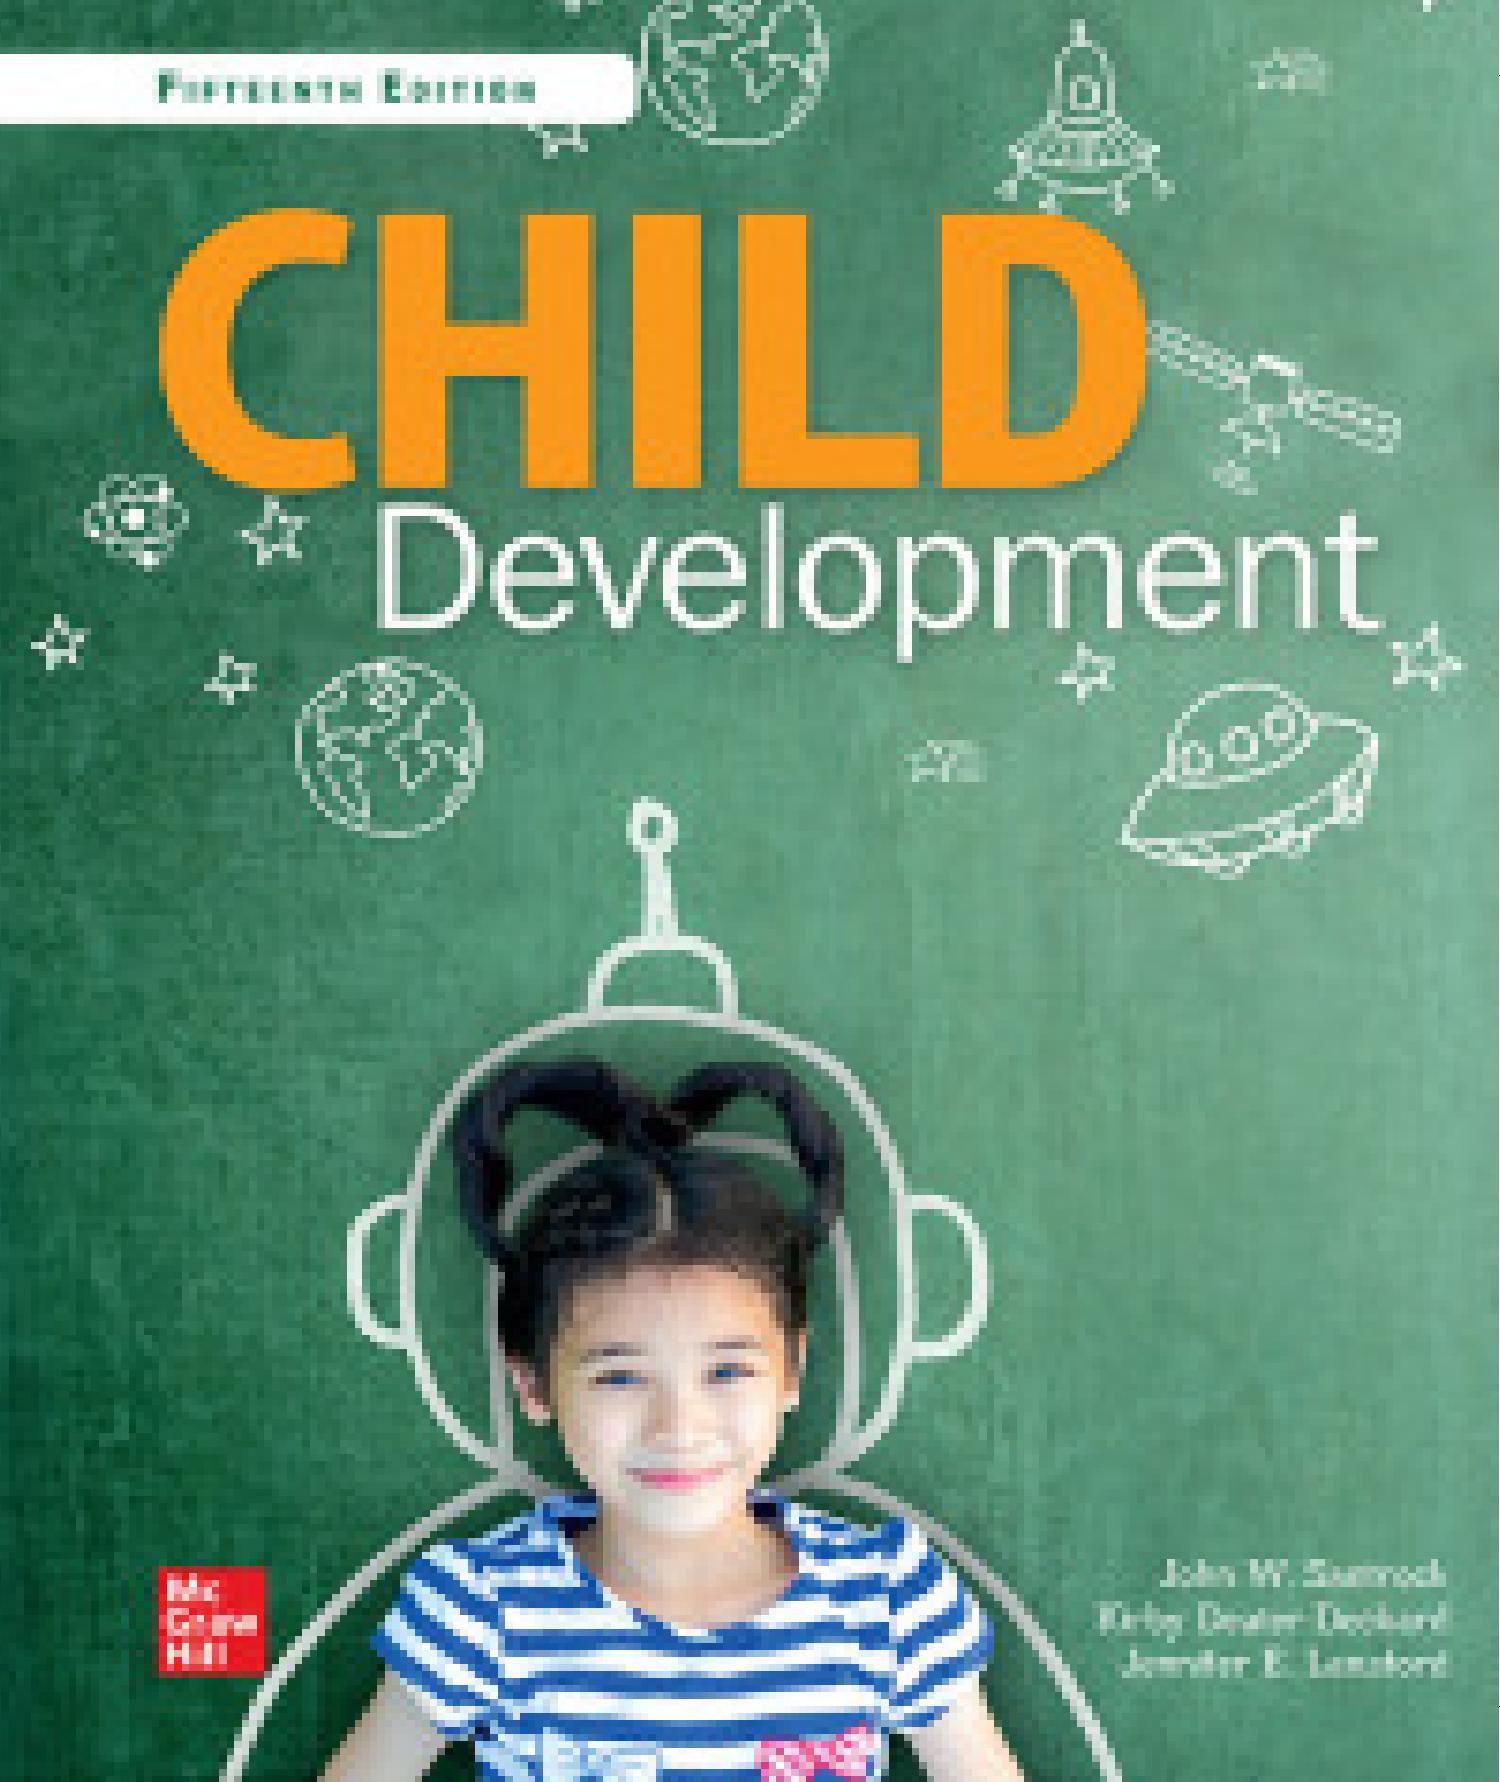 (eBook PDF)Child Development An Introduction 15th Edition by John Santrock,Kirby Deater-Deckard,Jennifer Lansford